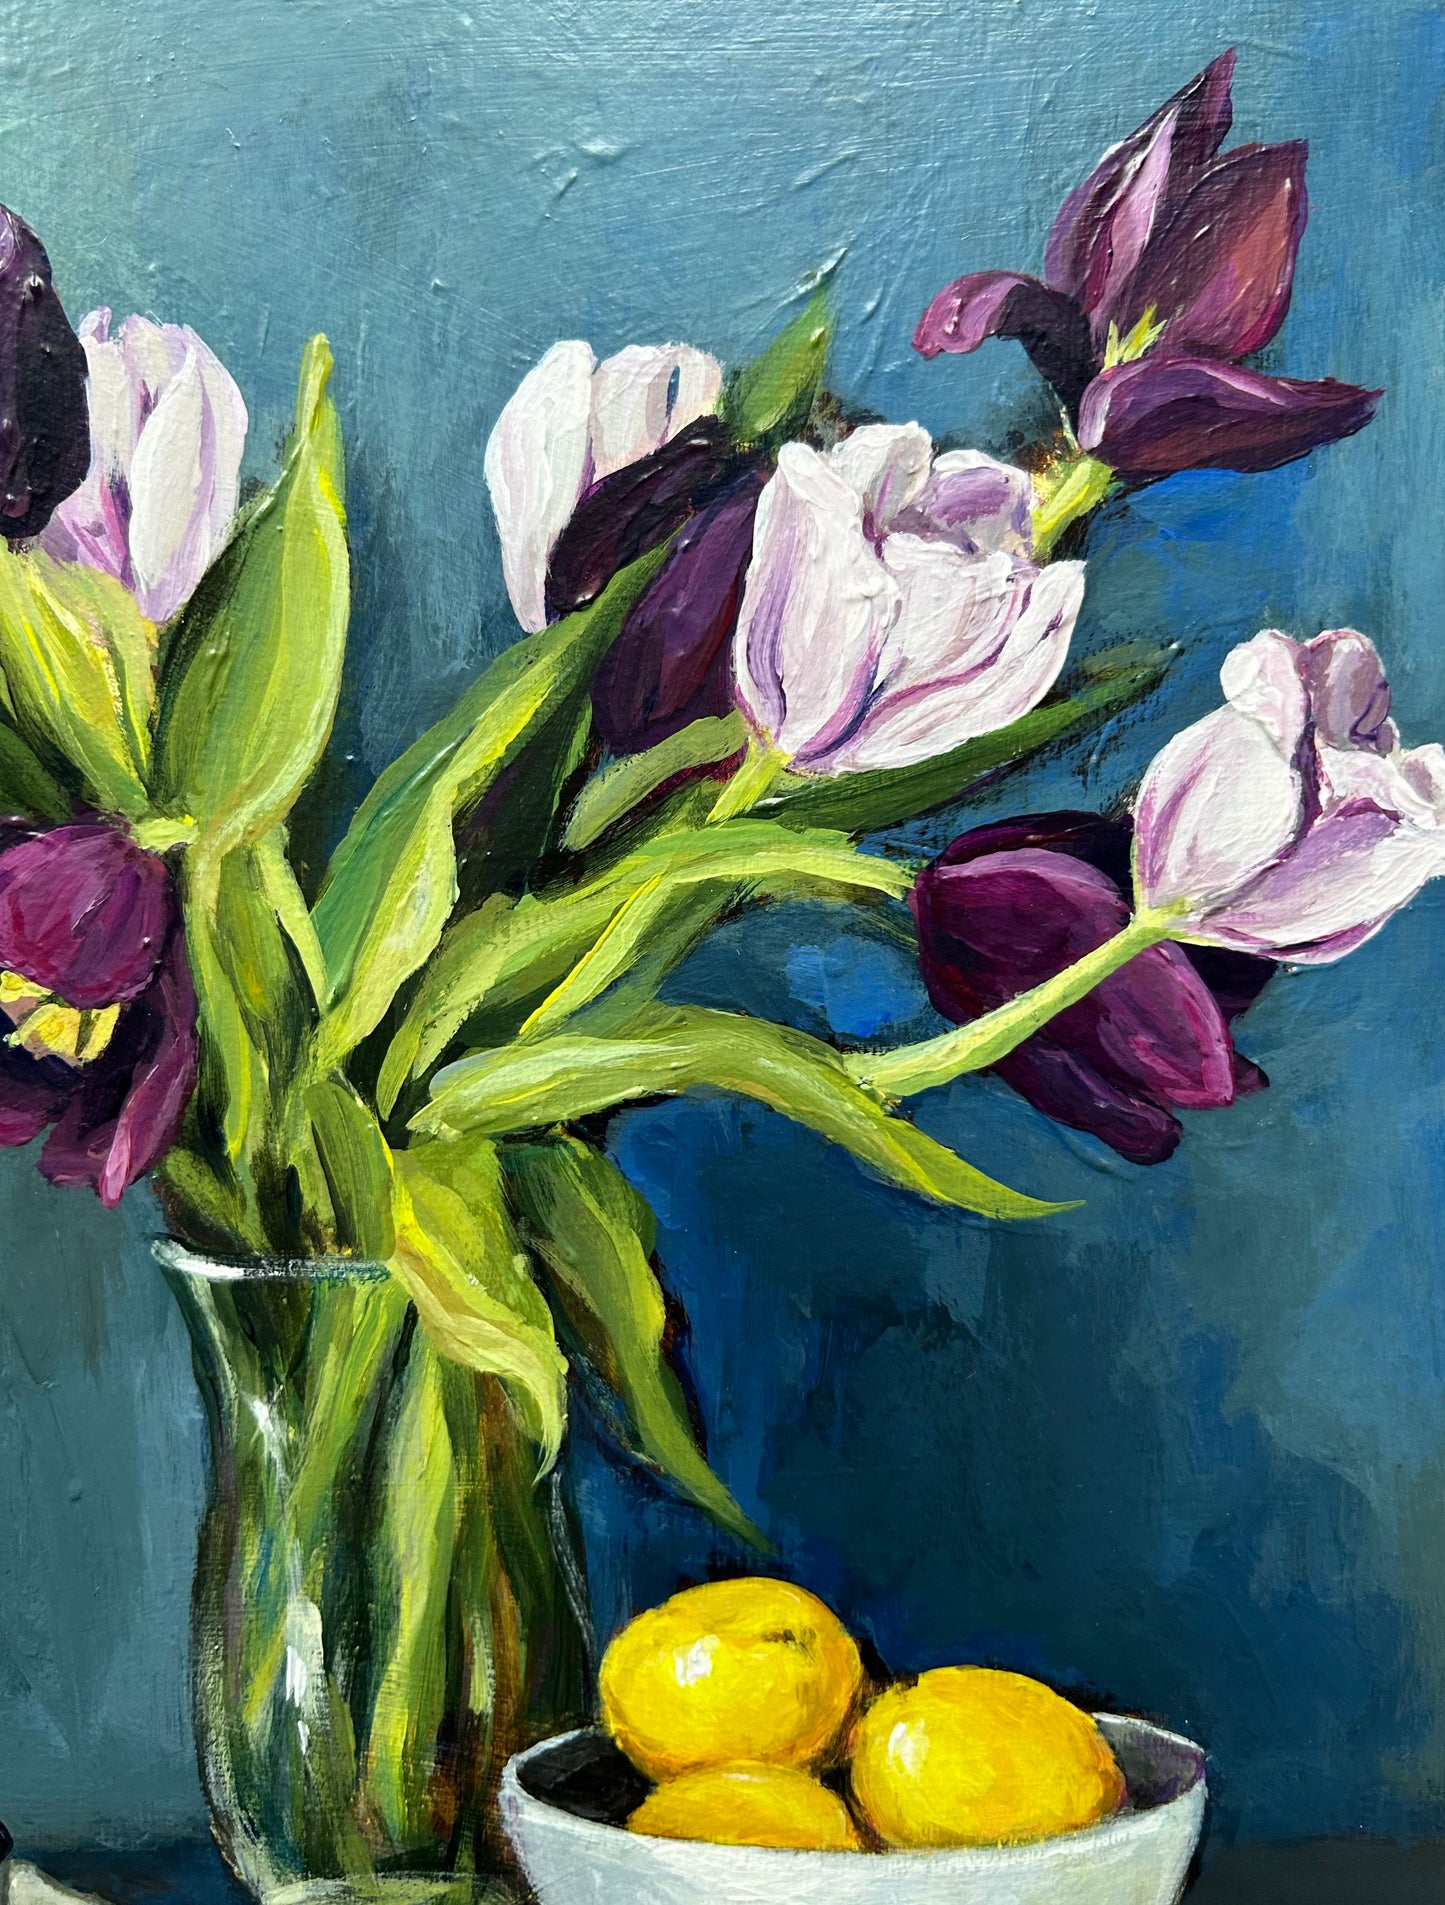 Lemon Tea and Tulips